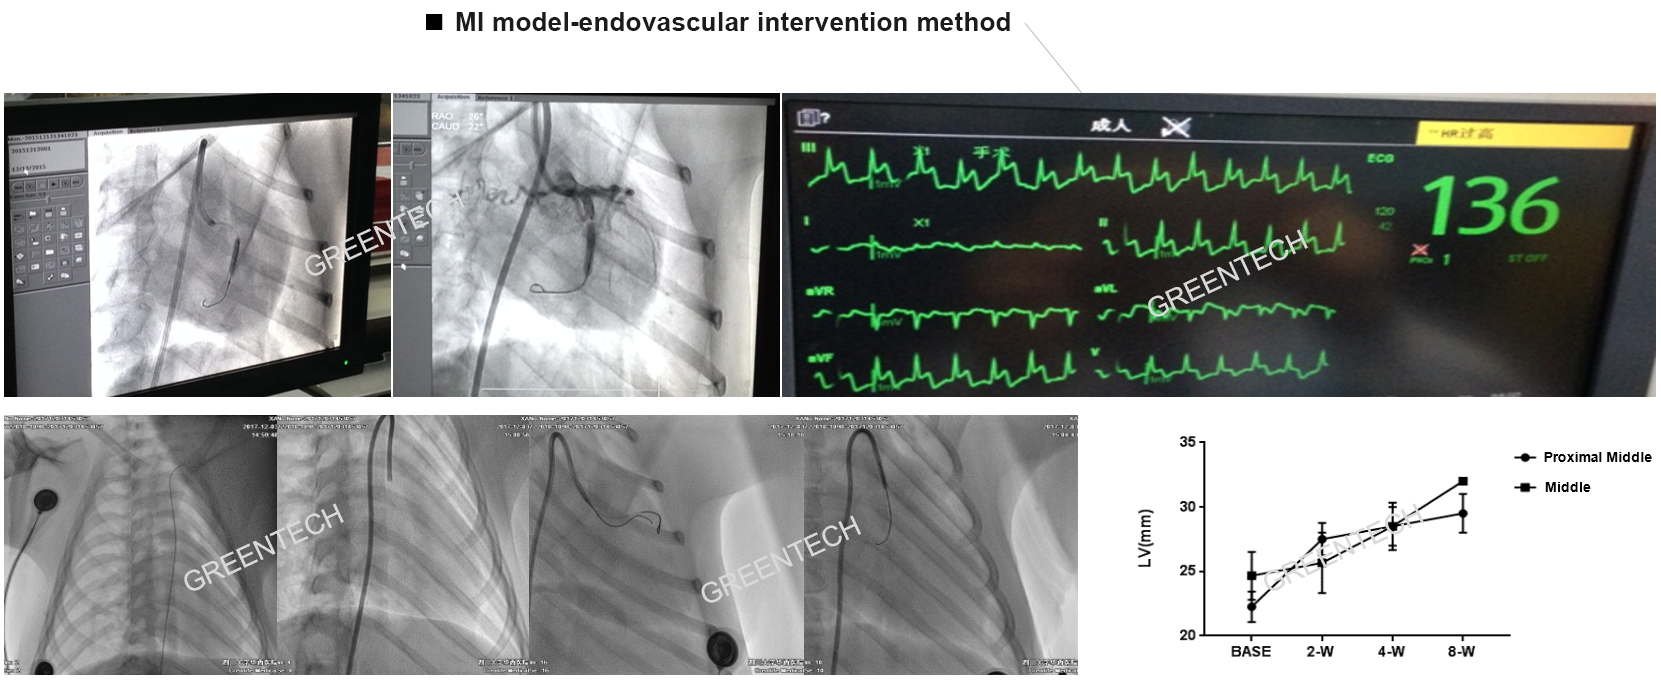 Myocardial infarction model-endovascular intervention method.png